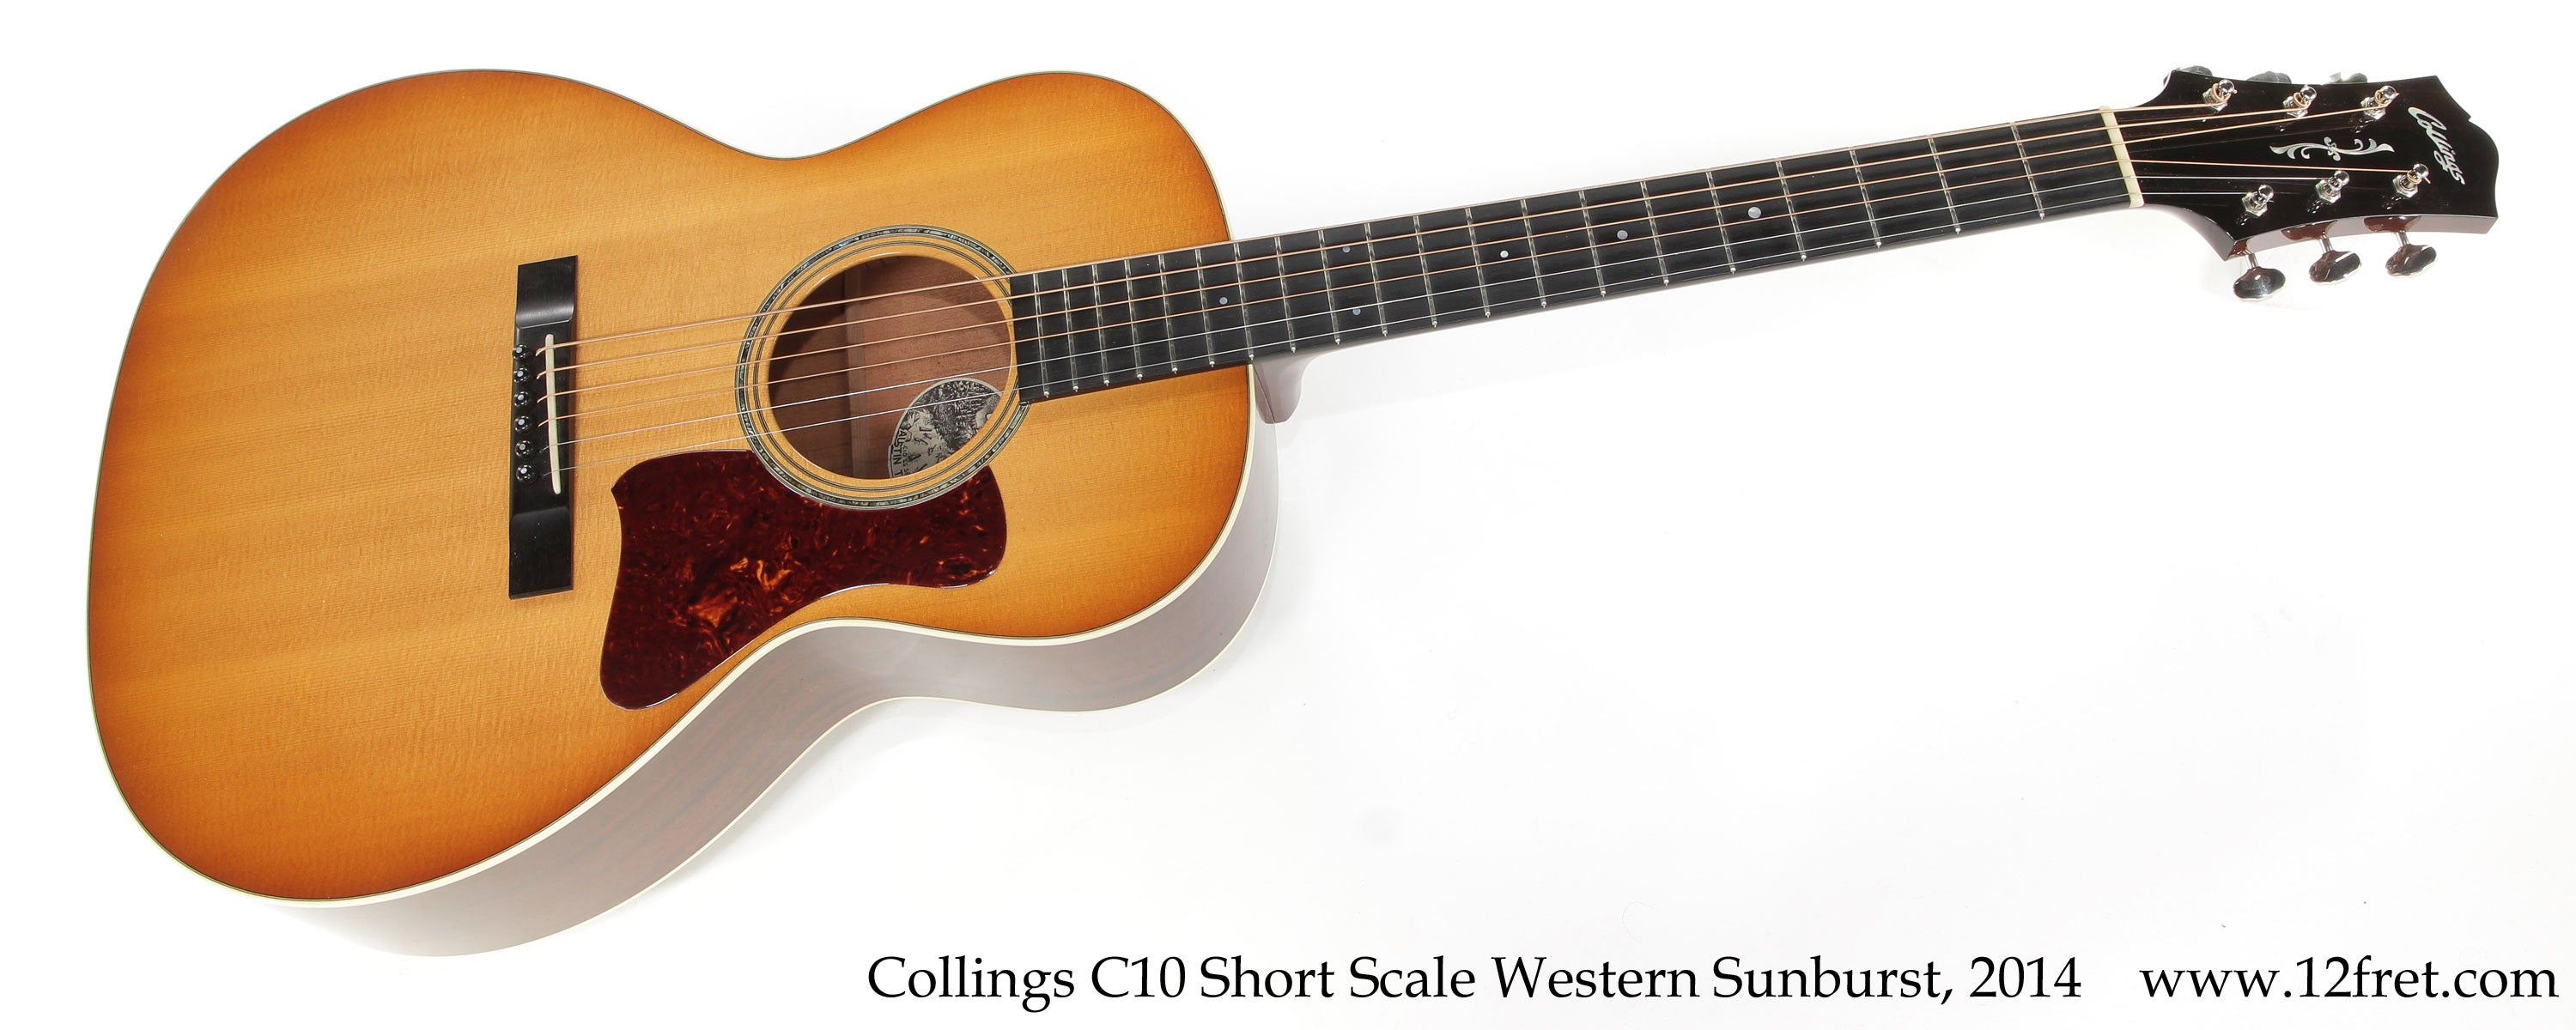 Collings C10 Short Scale Western Sunburst, 2014  - The Twelfth Fret